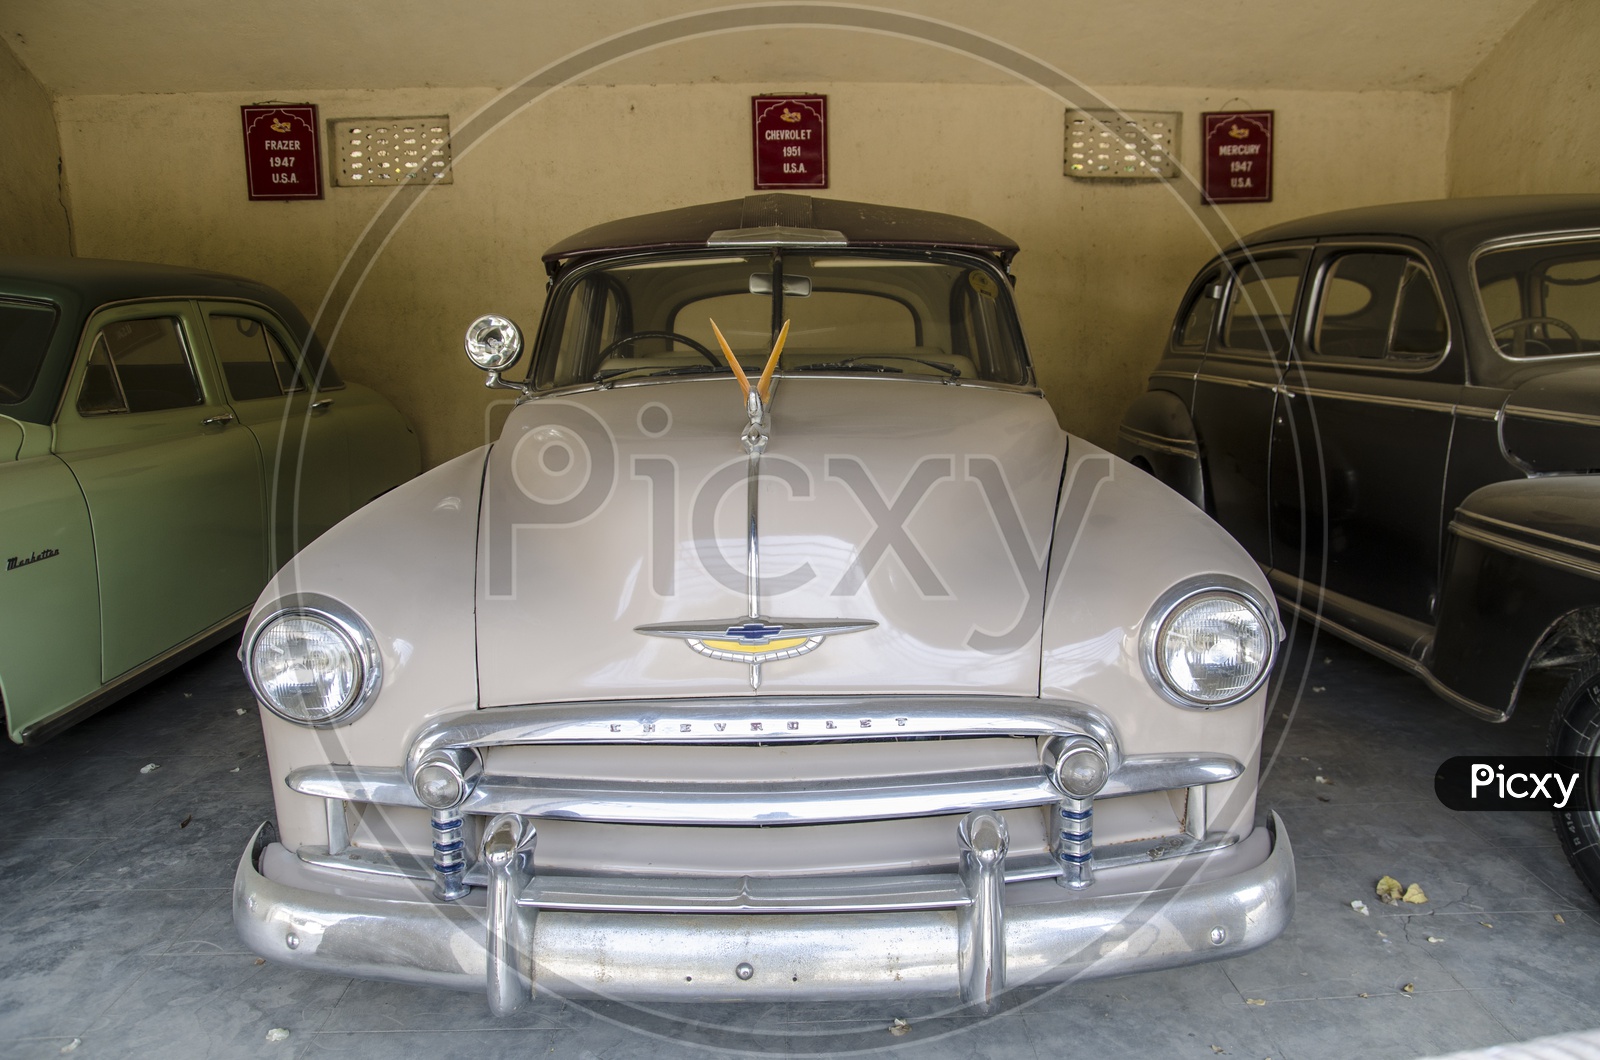 Chevrolet 1951 Model Car at Gondal State, Saurashtra